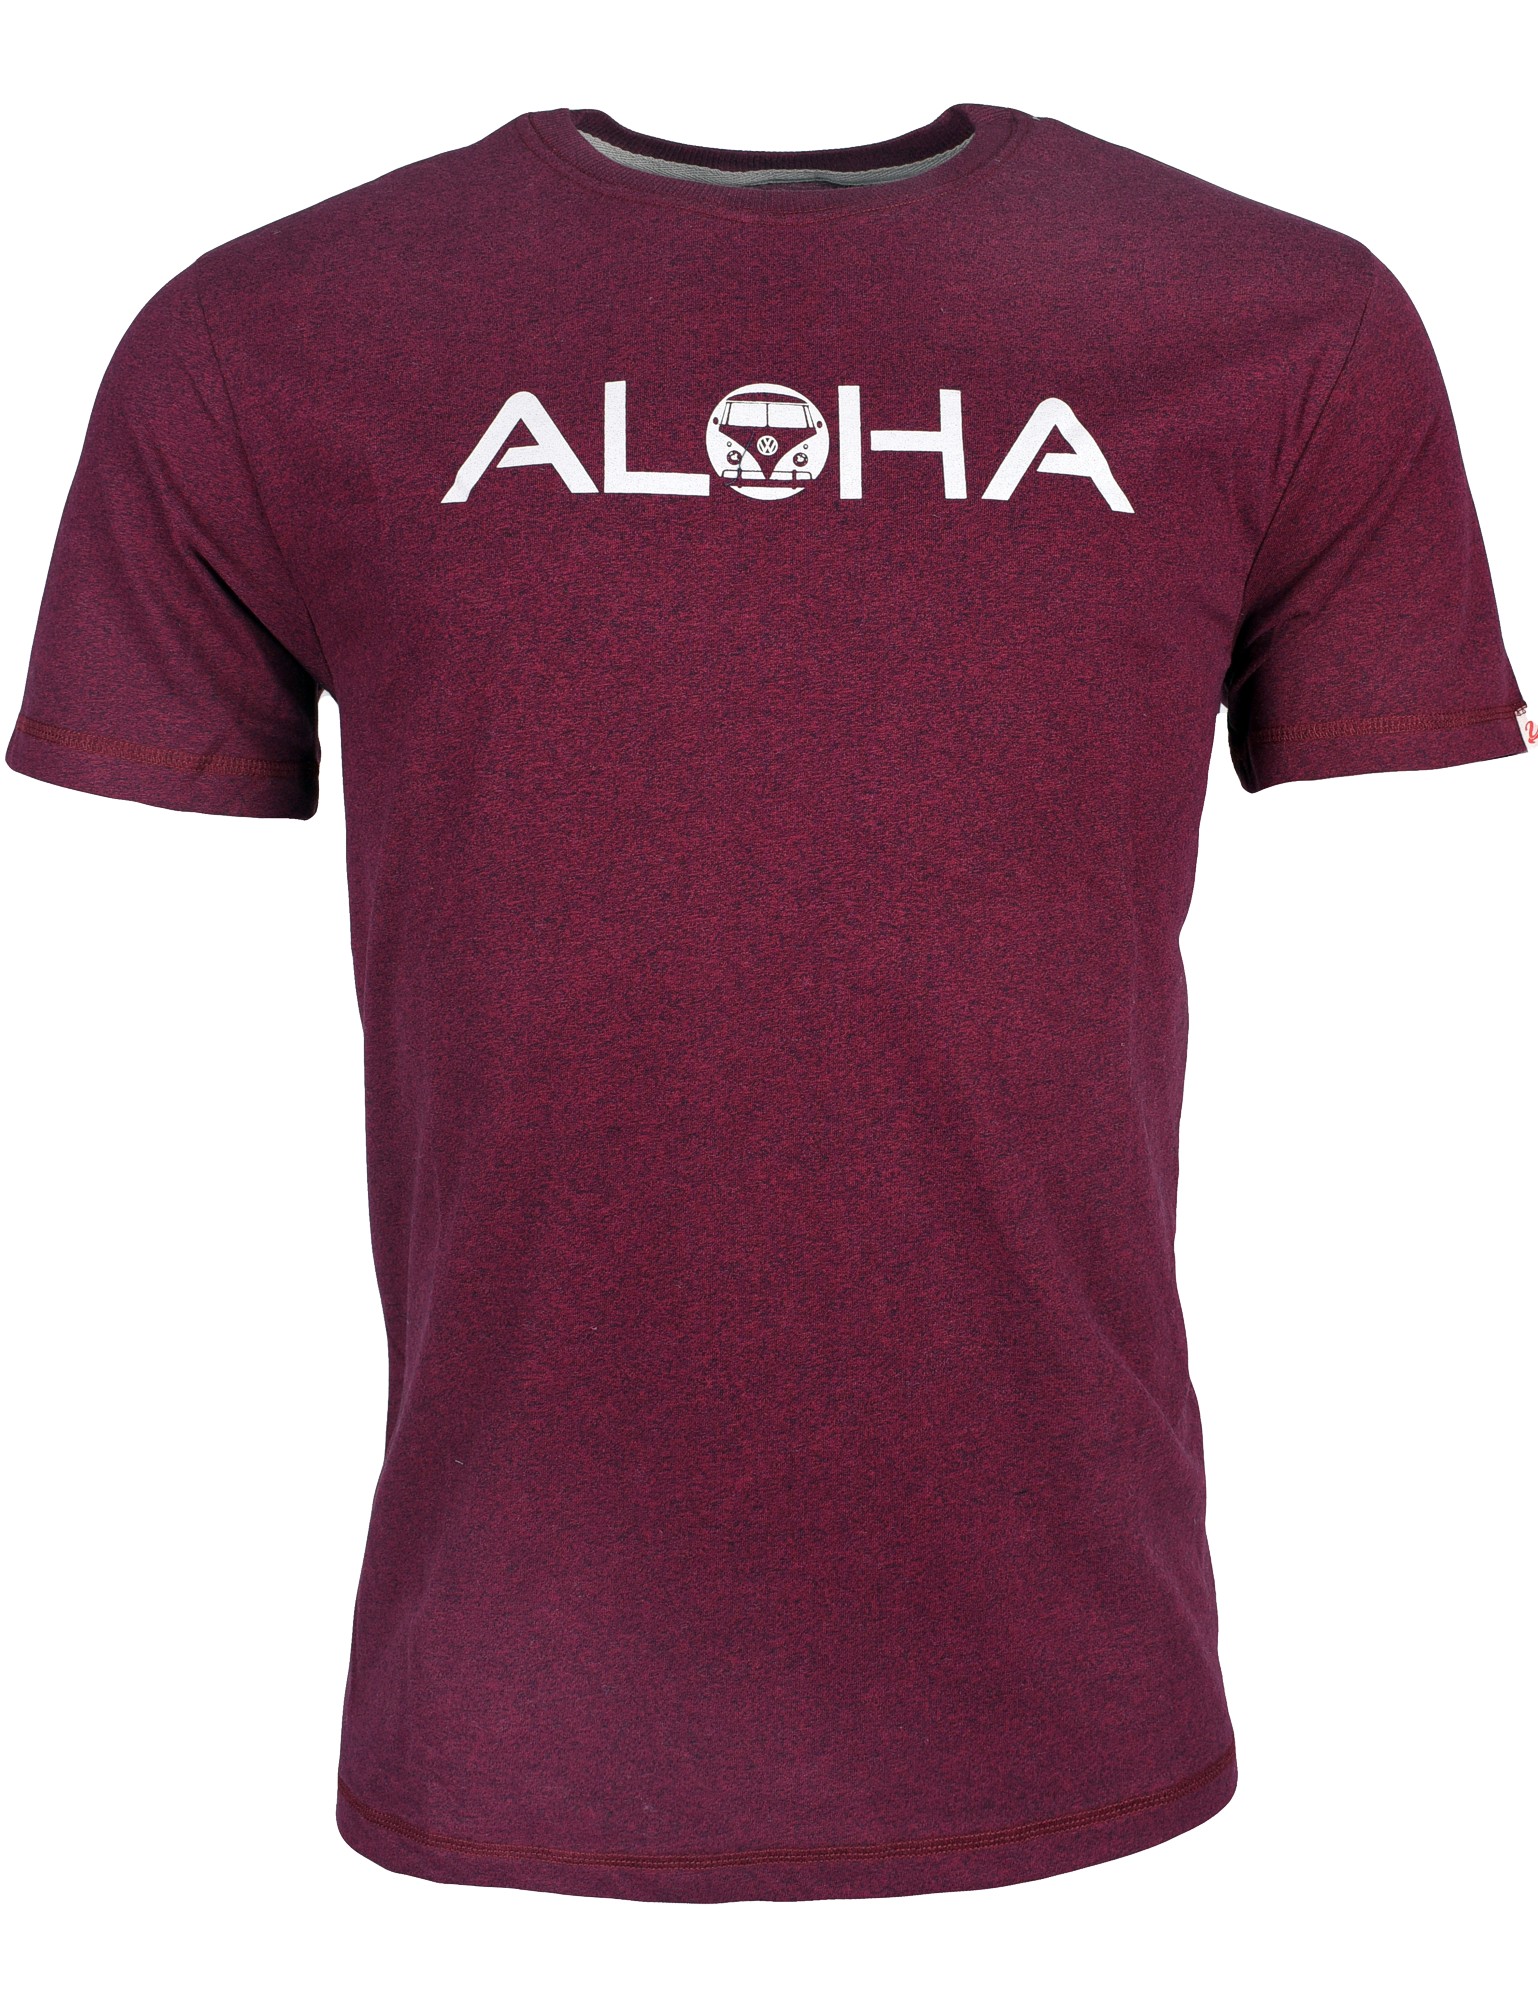 Herren T-Shirt VW Bulli »ALOHA« Bordeaux